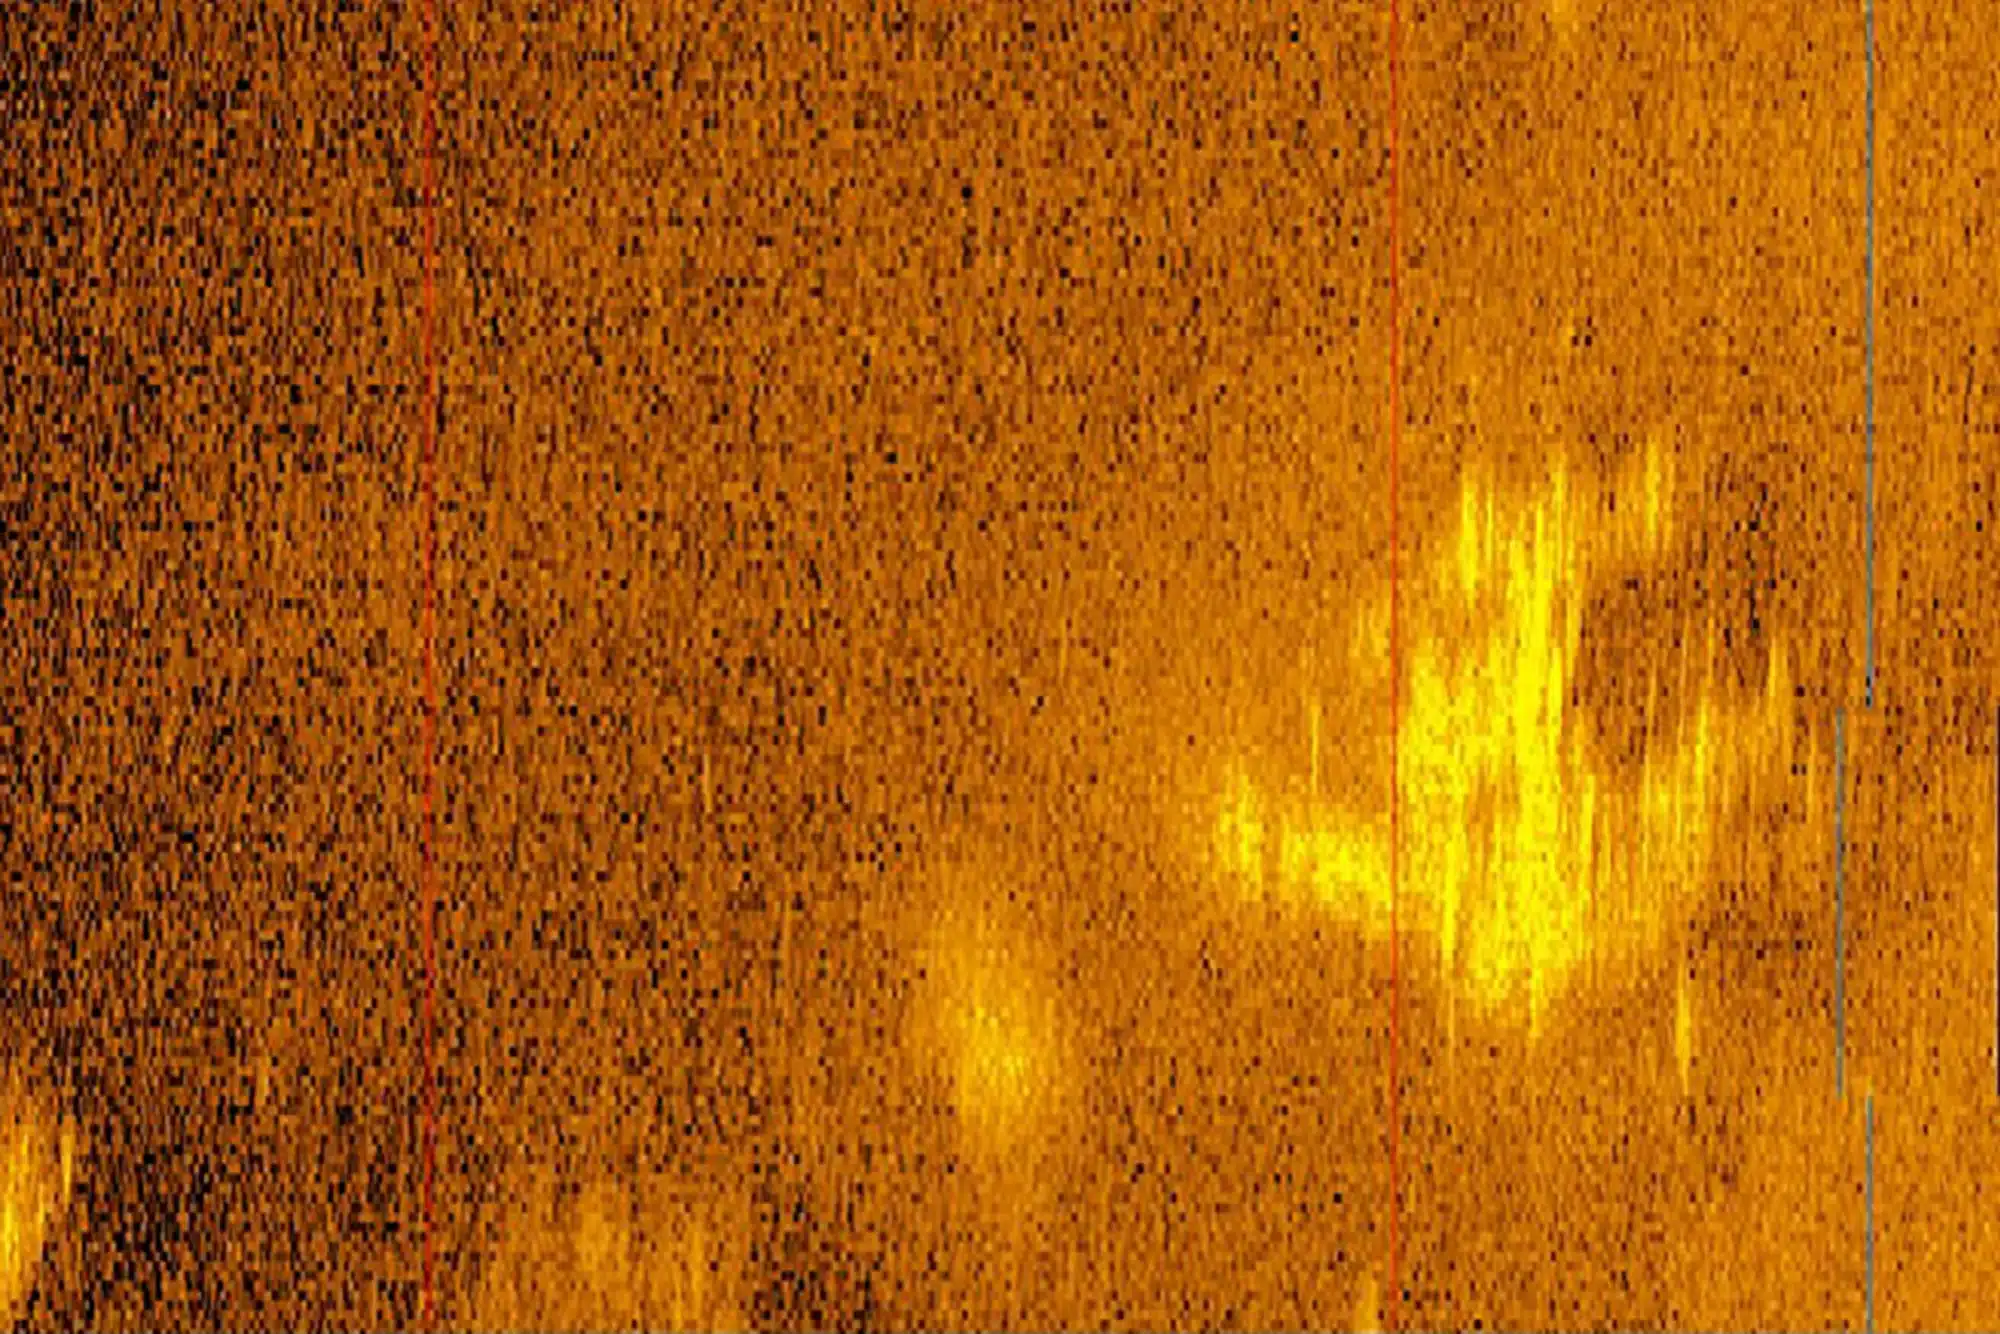 sonar image potential amelia earheart airplane